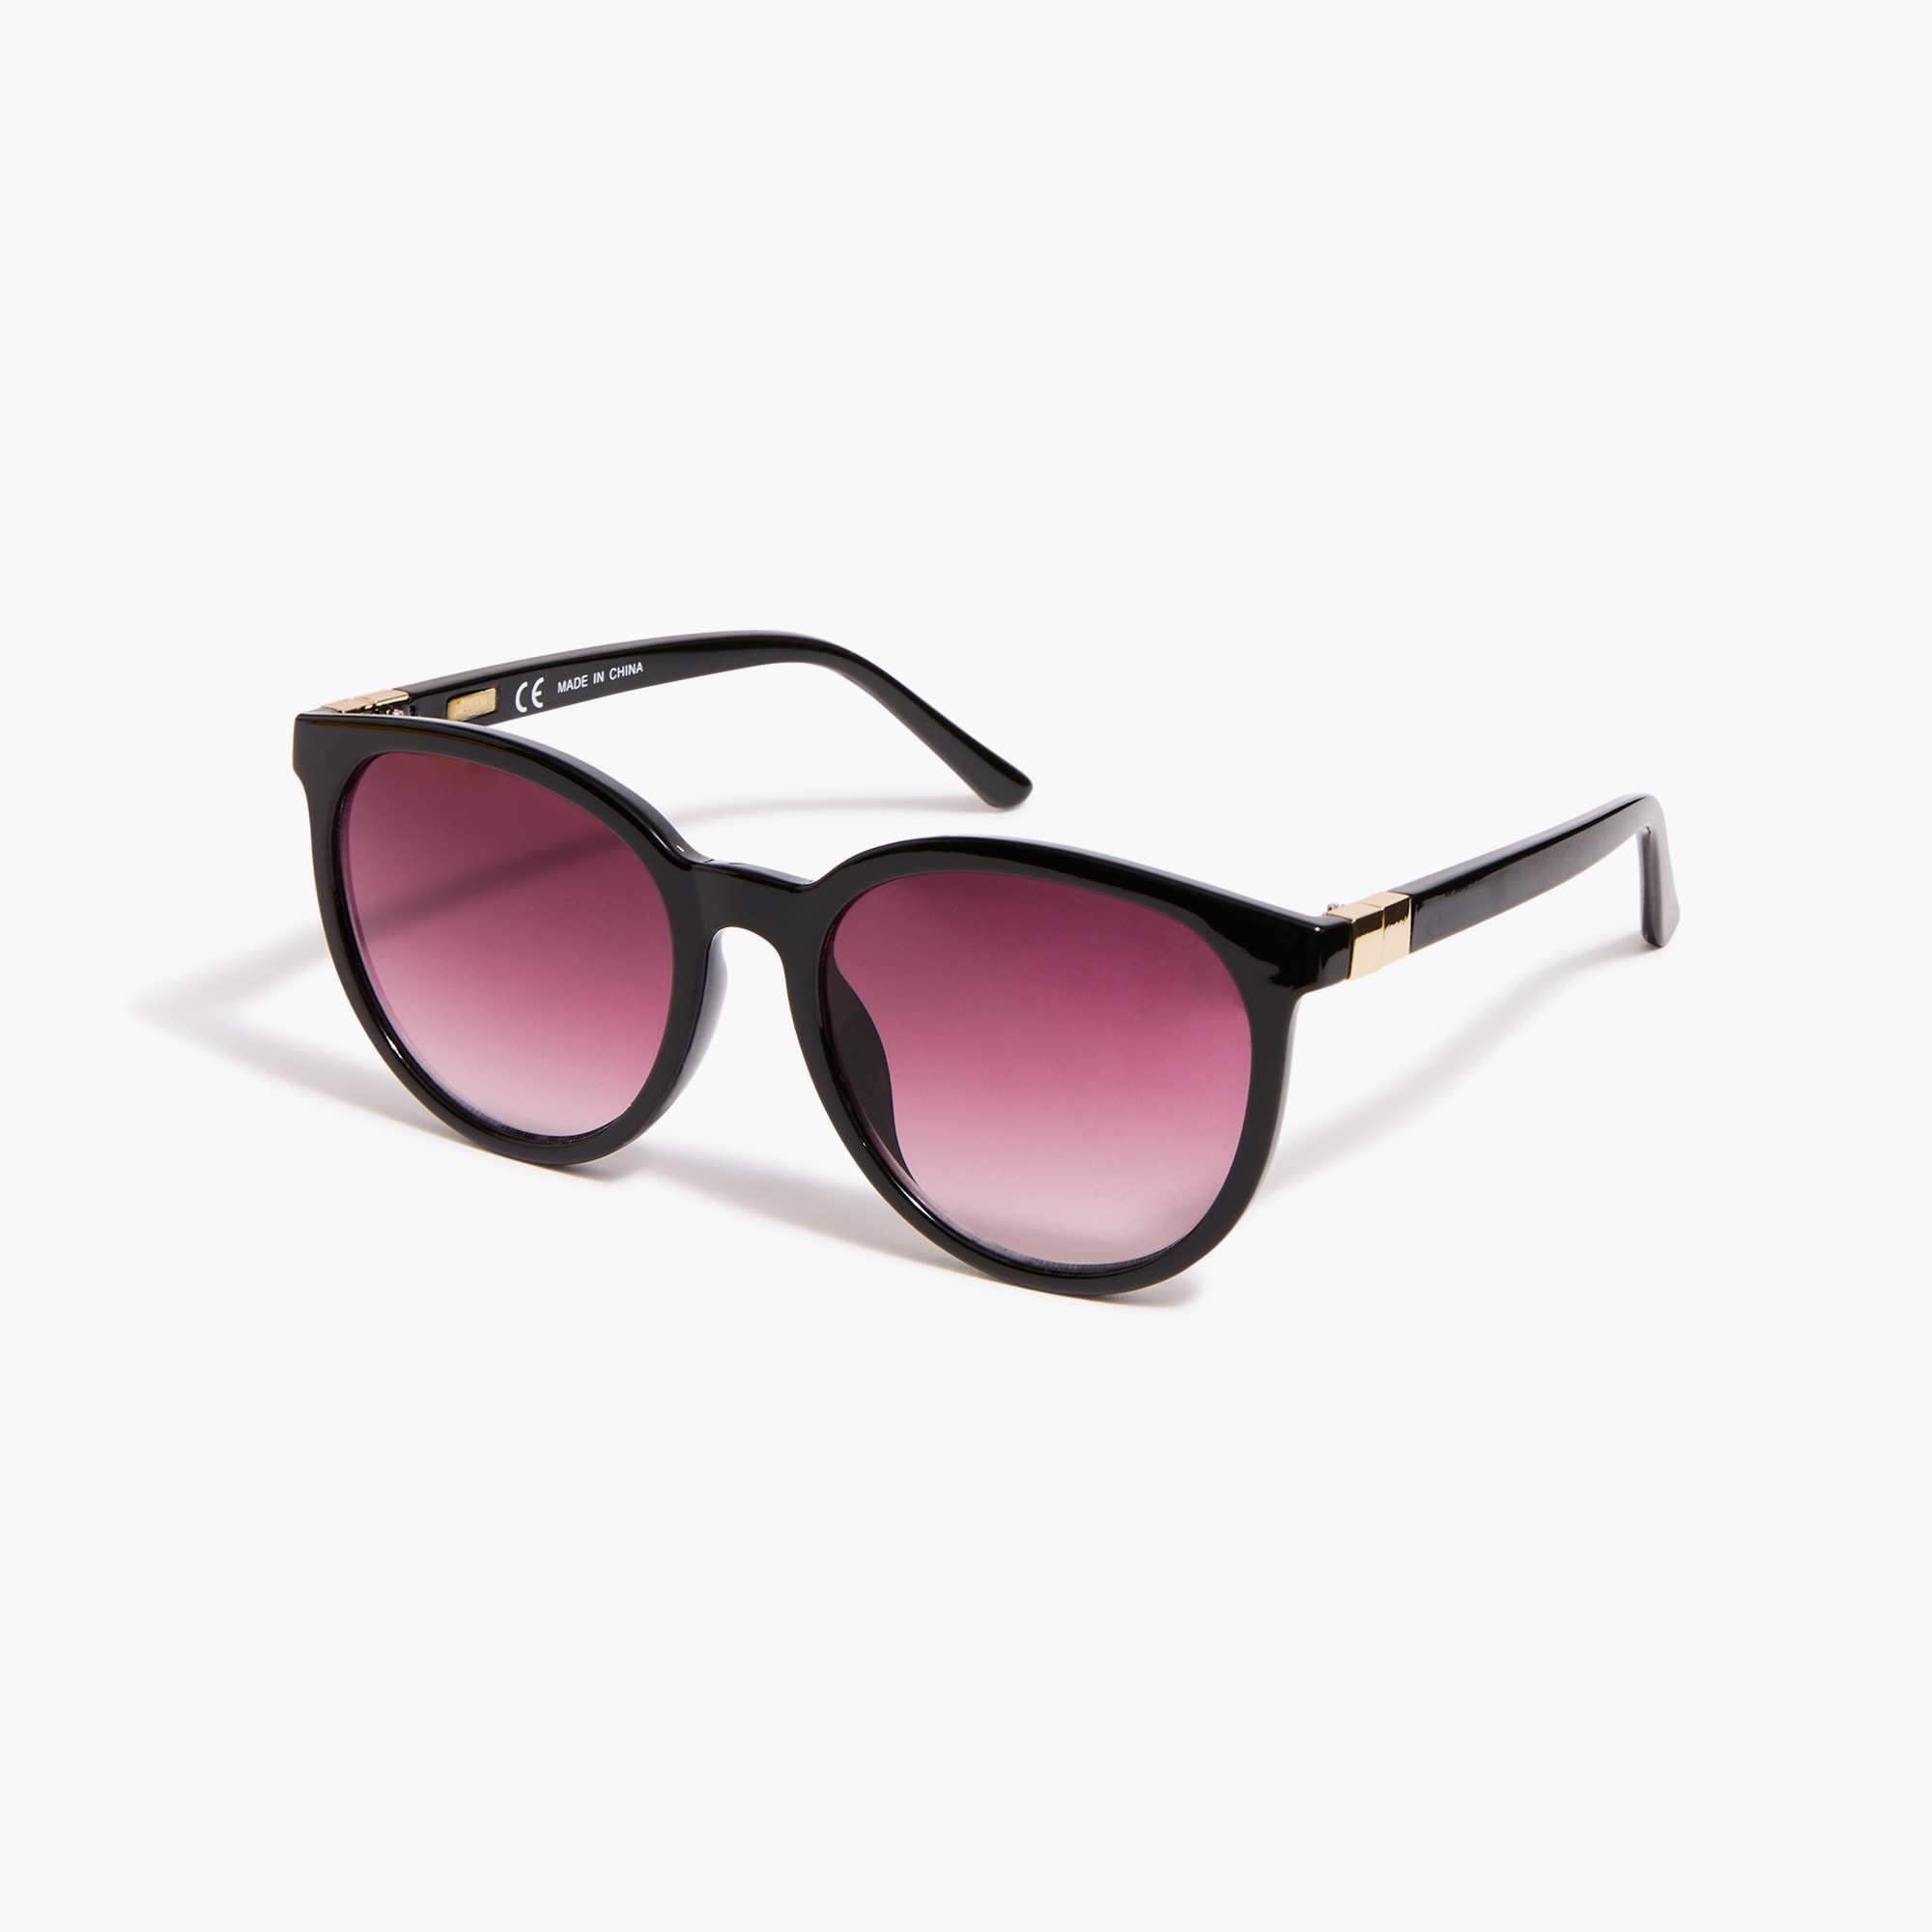 Jcrew Oversized sunglasses